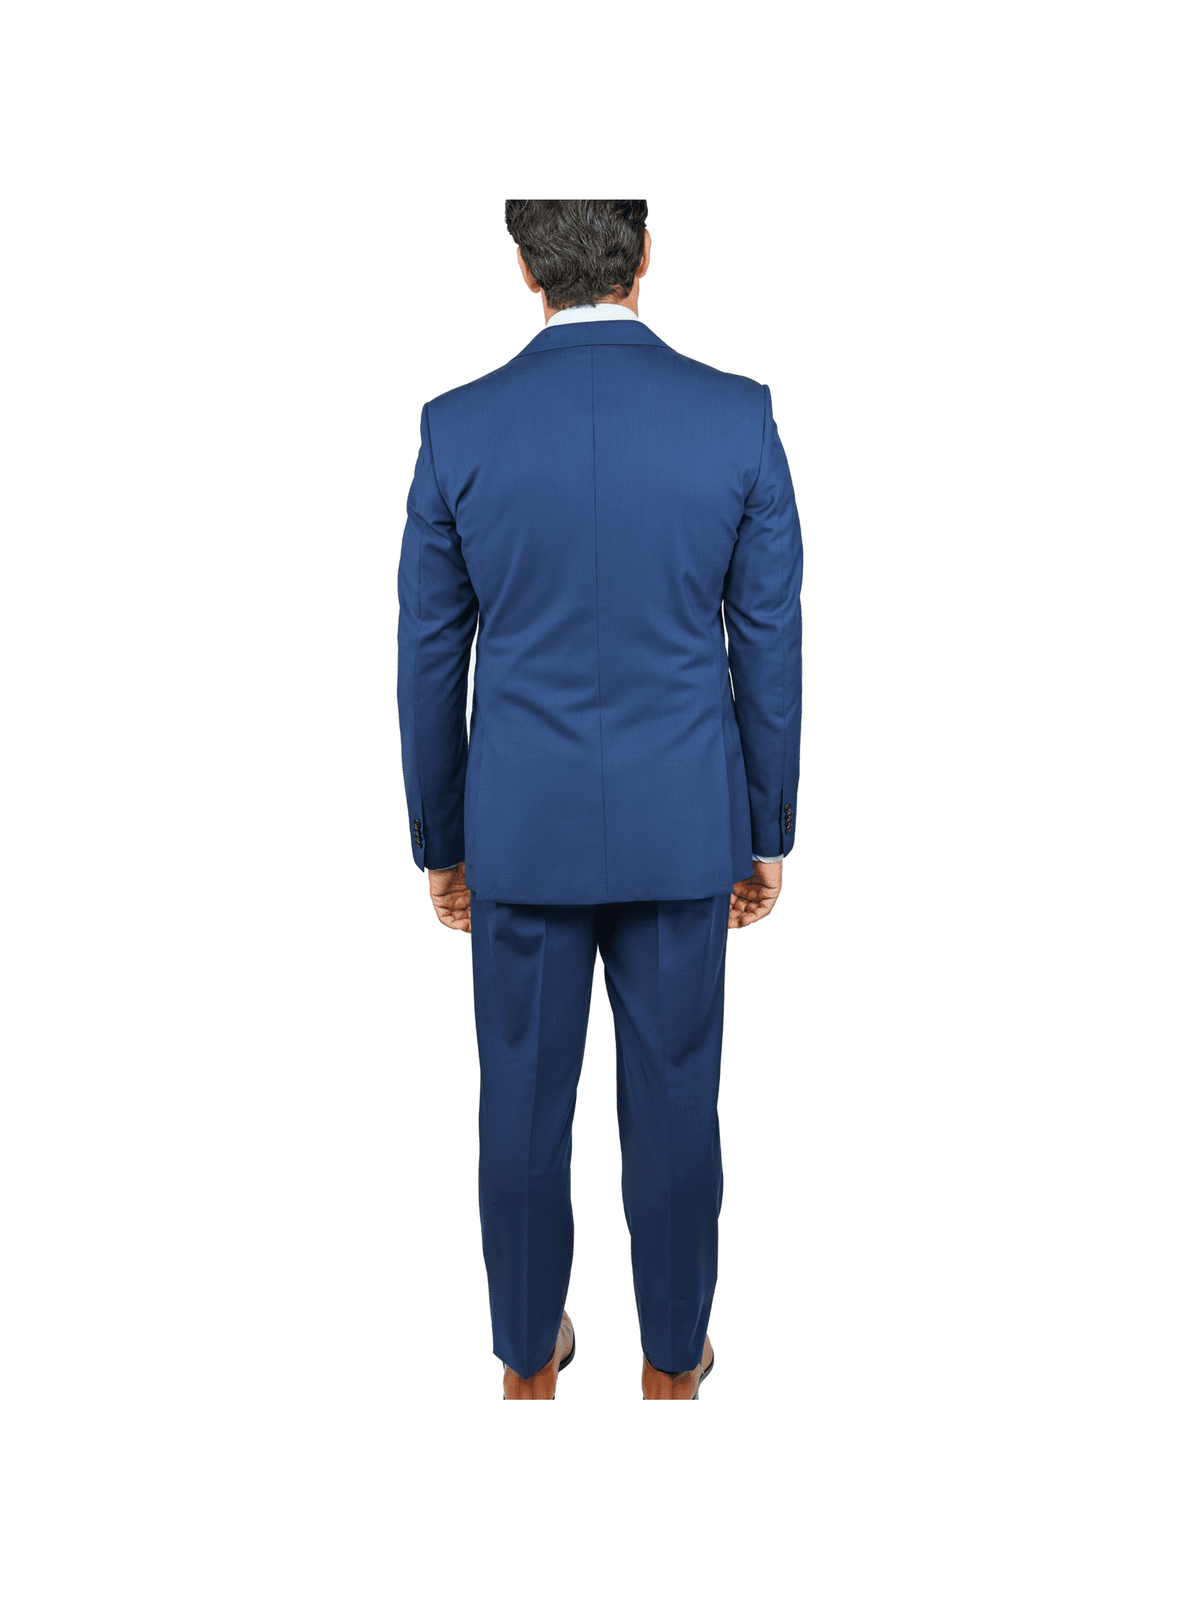 back view of John Varvatos blue slim fit suit